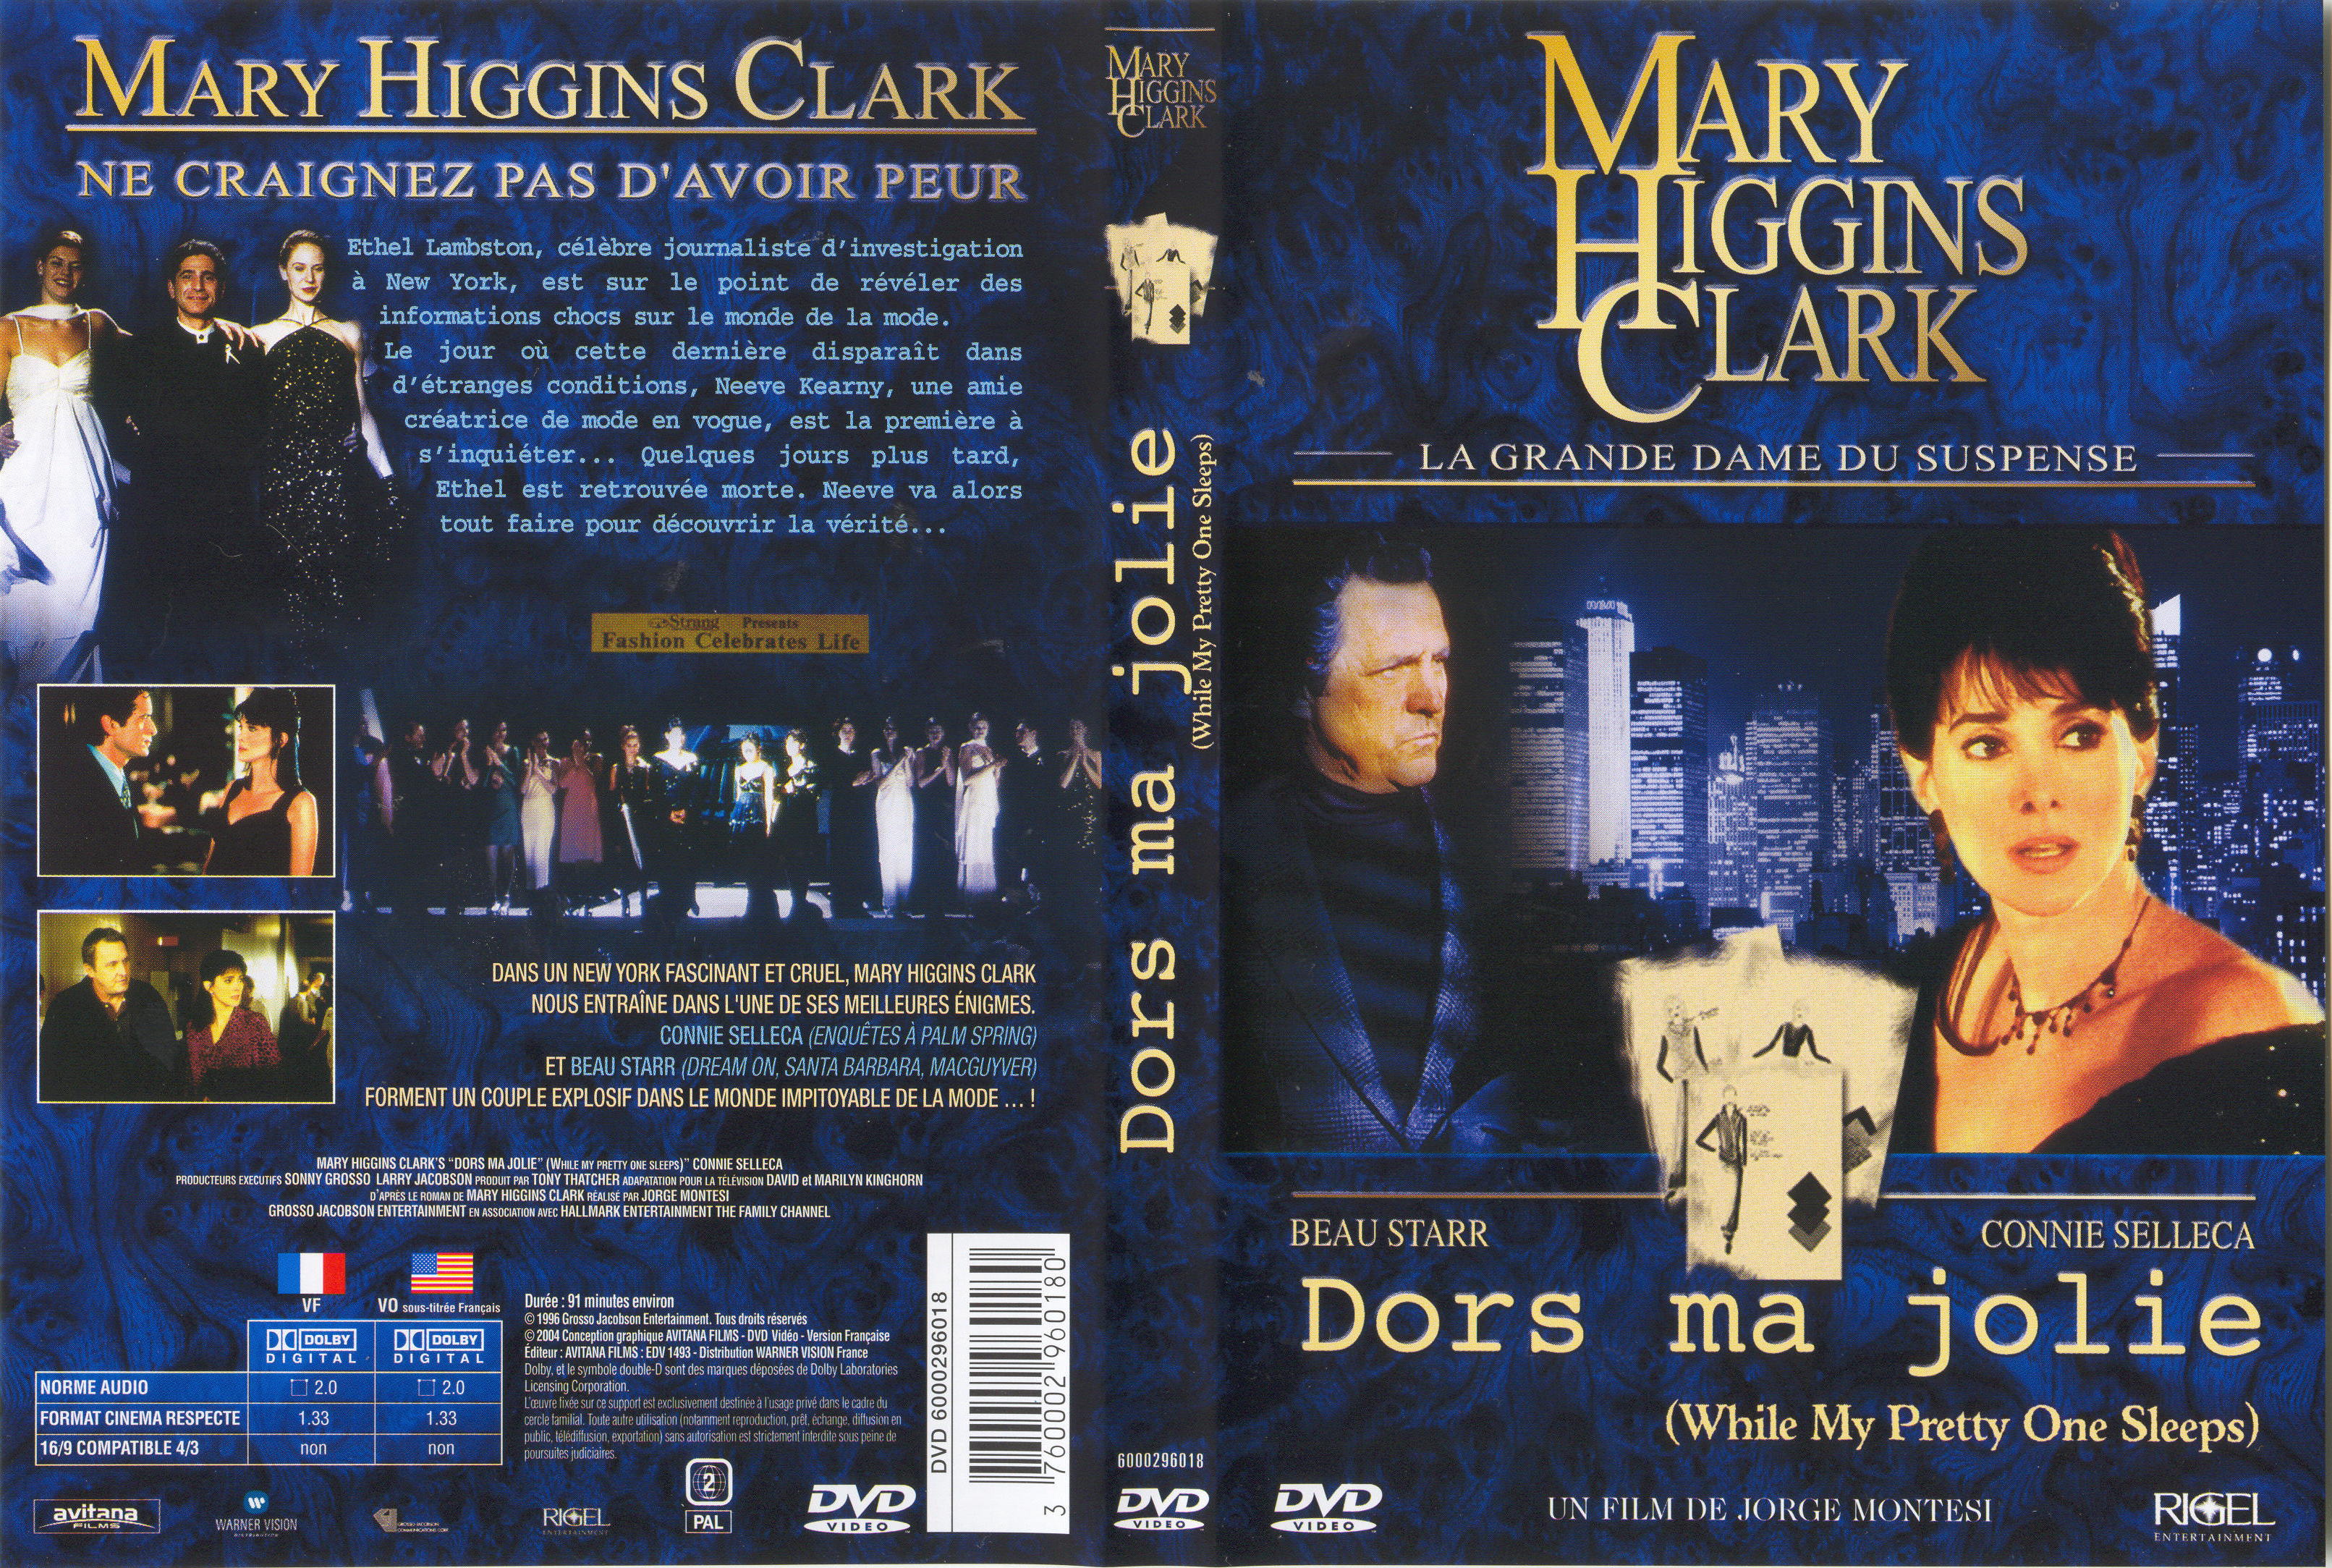 Jaquette DVD de Mary Higgins Clark - Dors ma jolie - Cinéma Passion